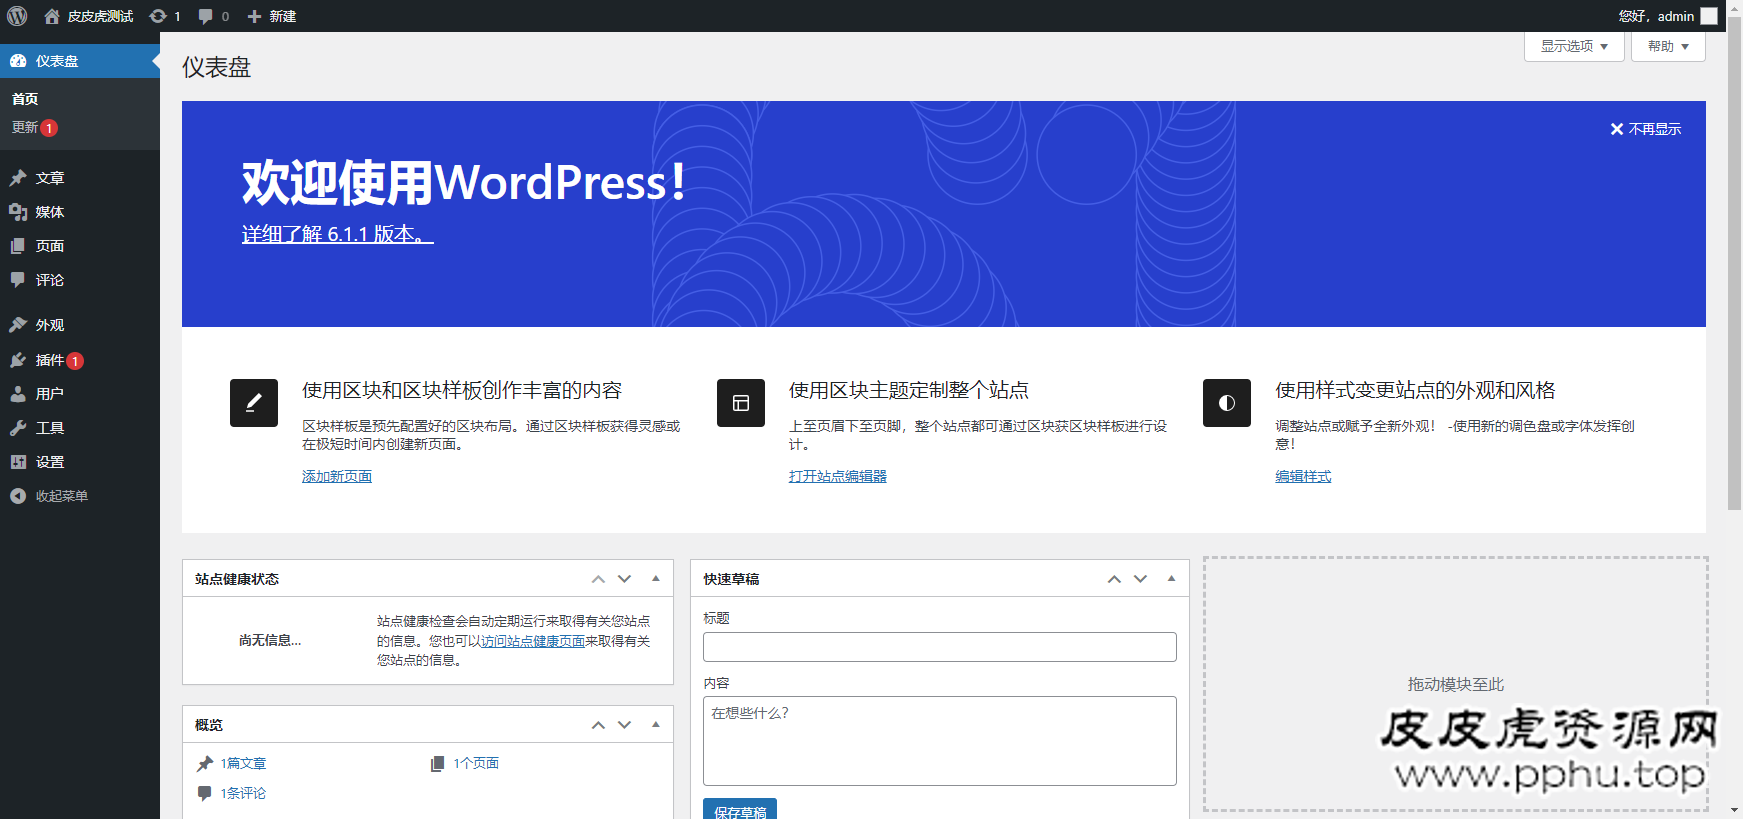 WordPress-6.1.1 程序-皮皮虎资源网